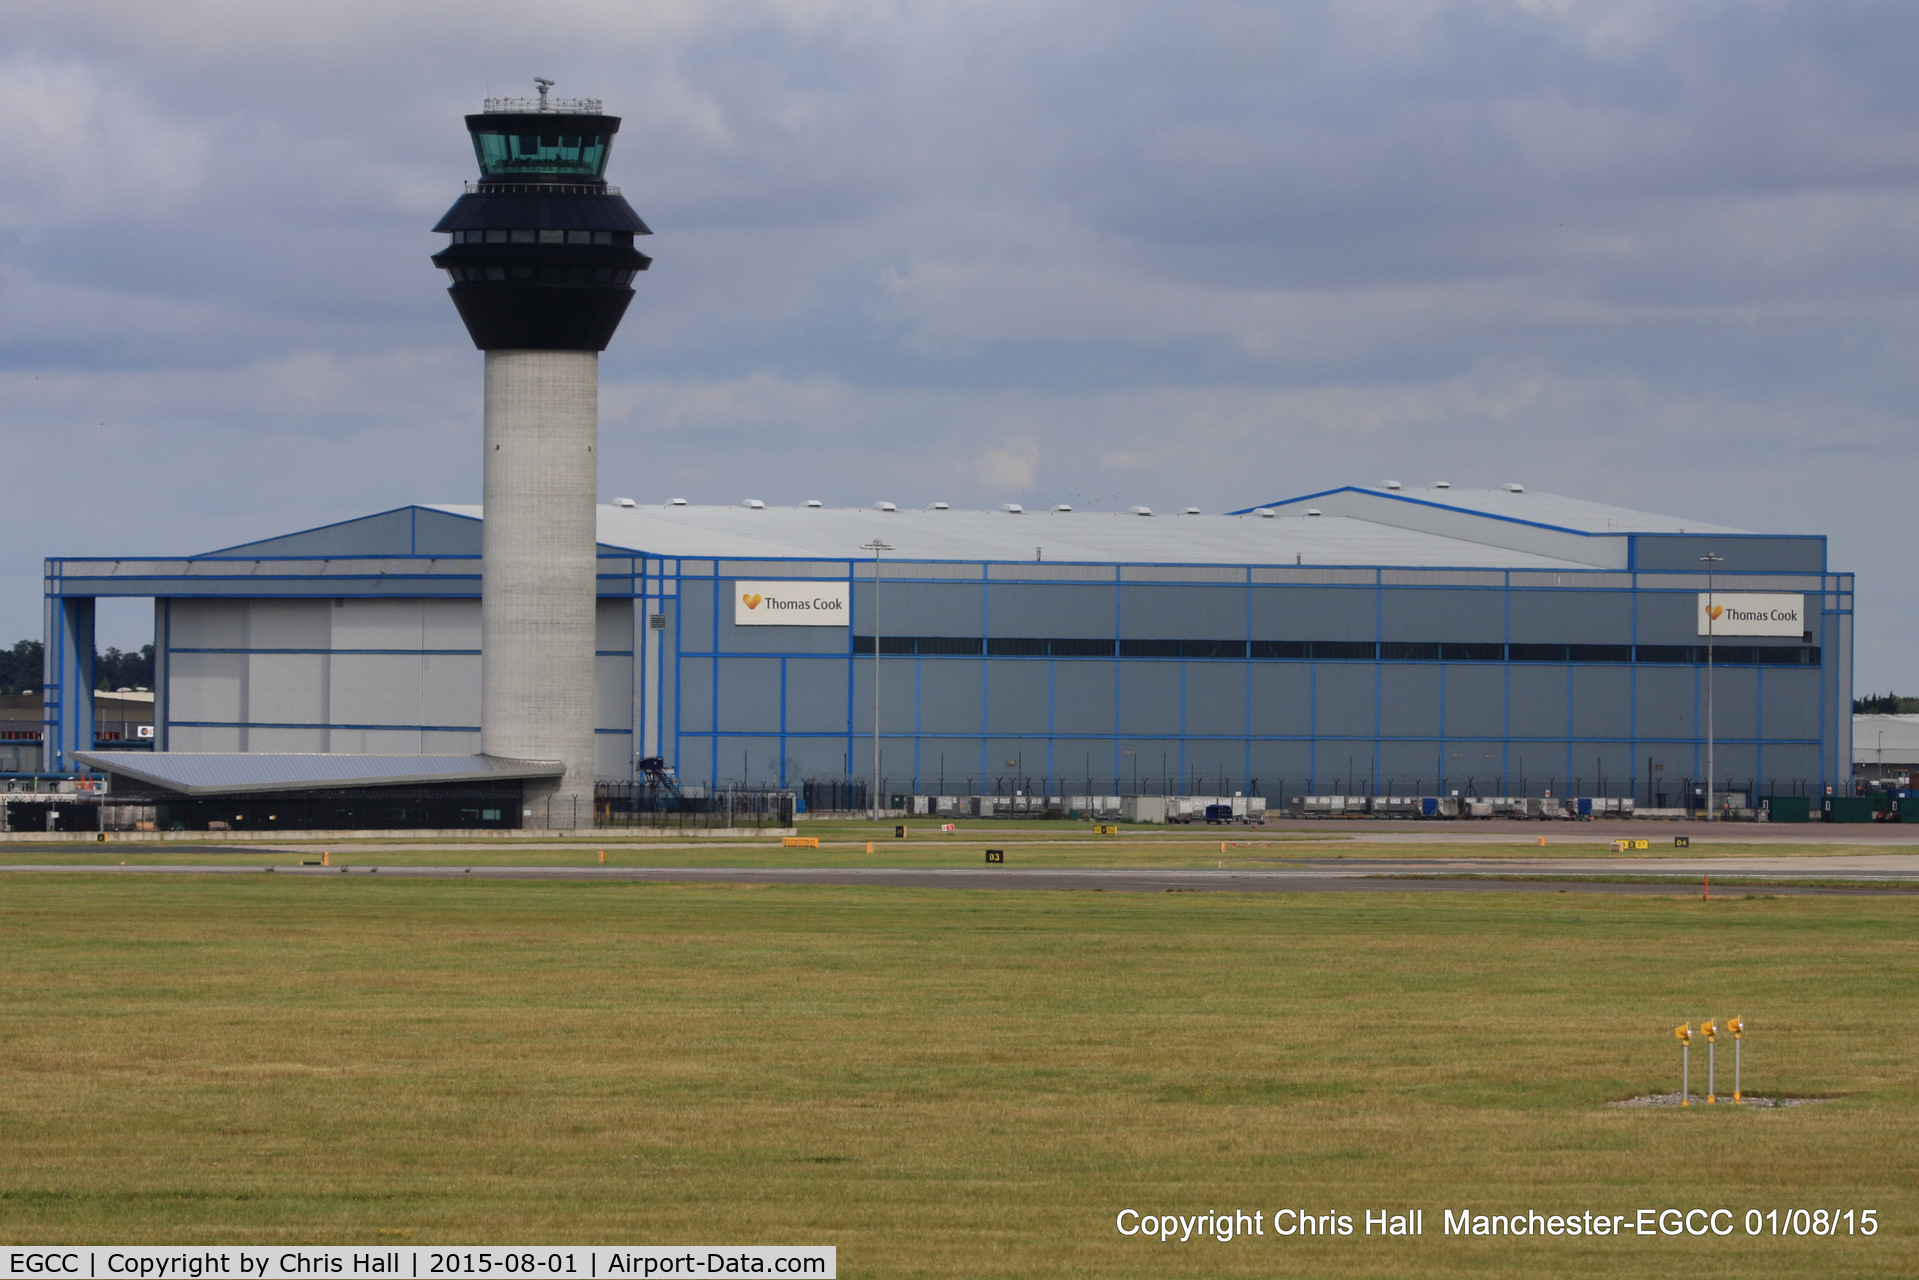 Manchester Airport, Manchester, England United Kingdom (EGCC) - Thomas Cook hangar